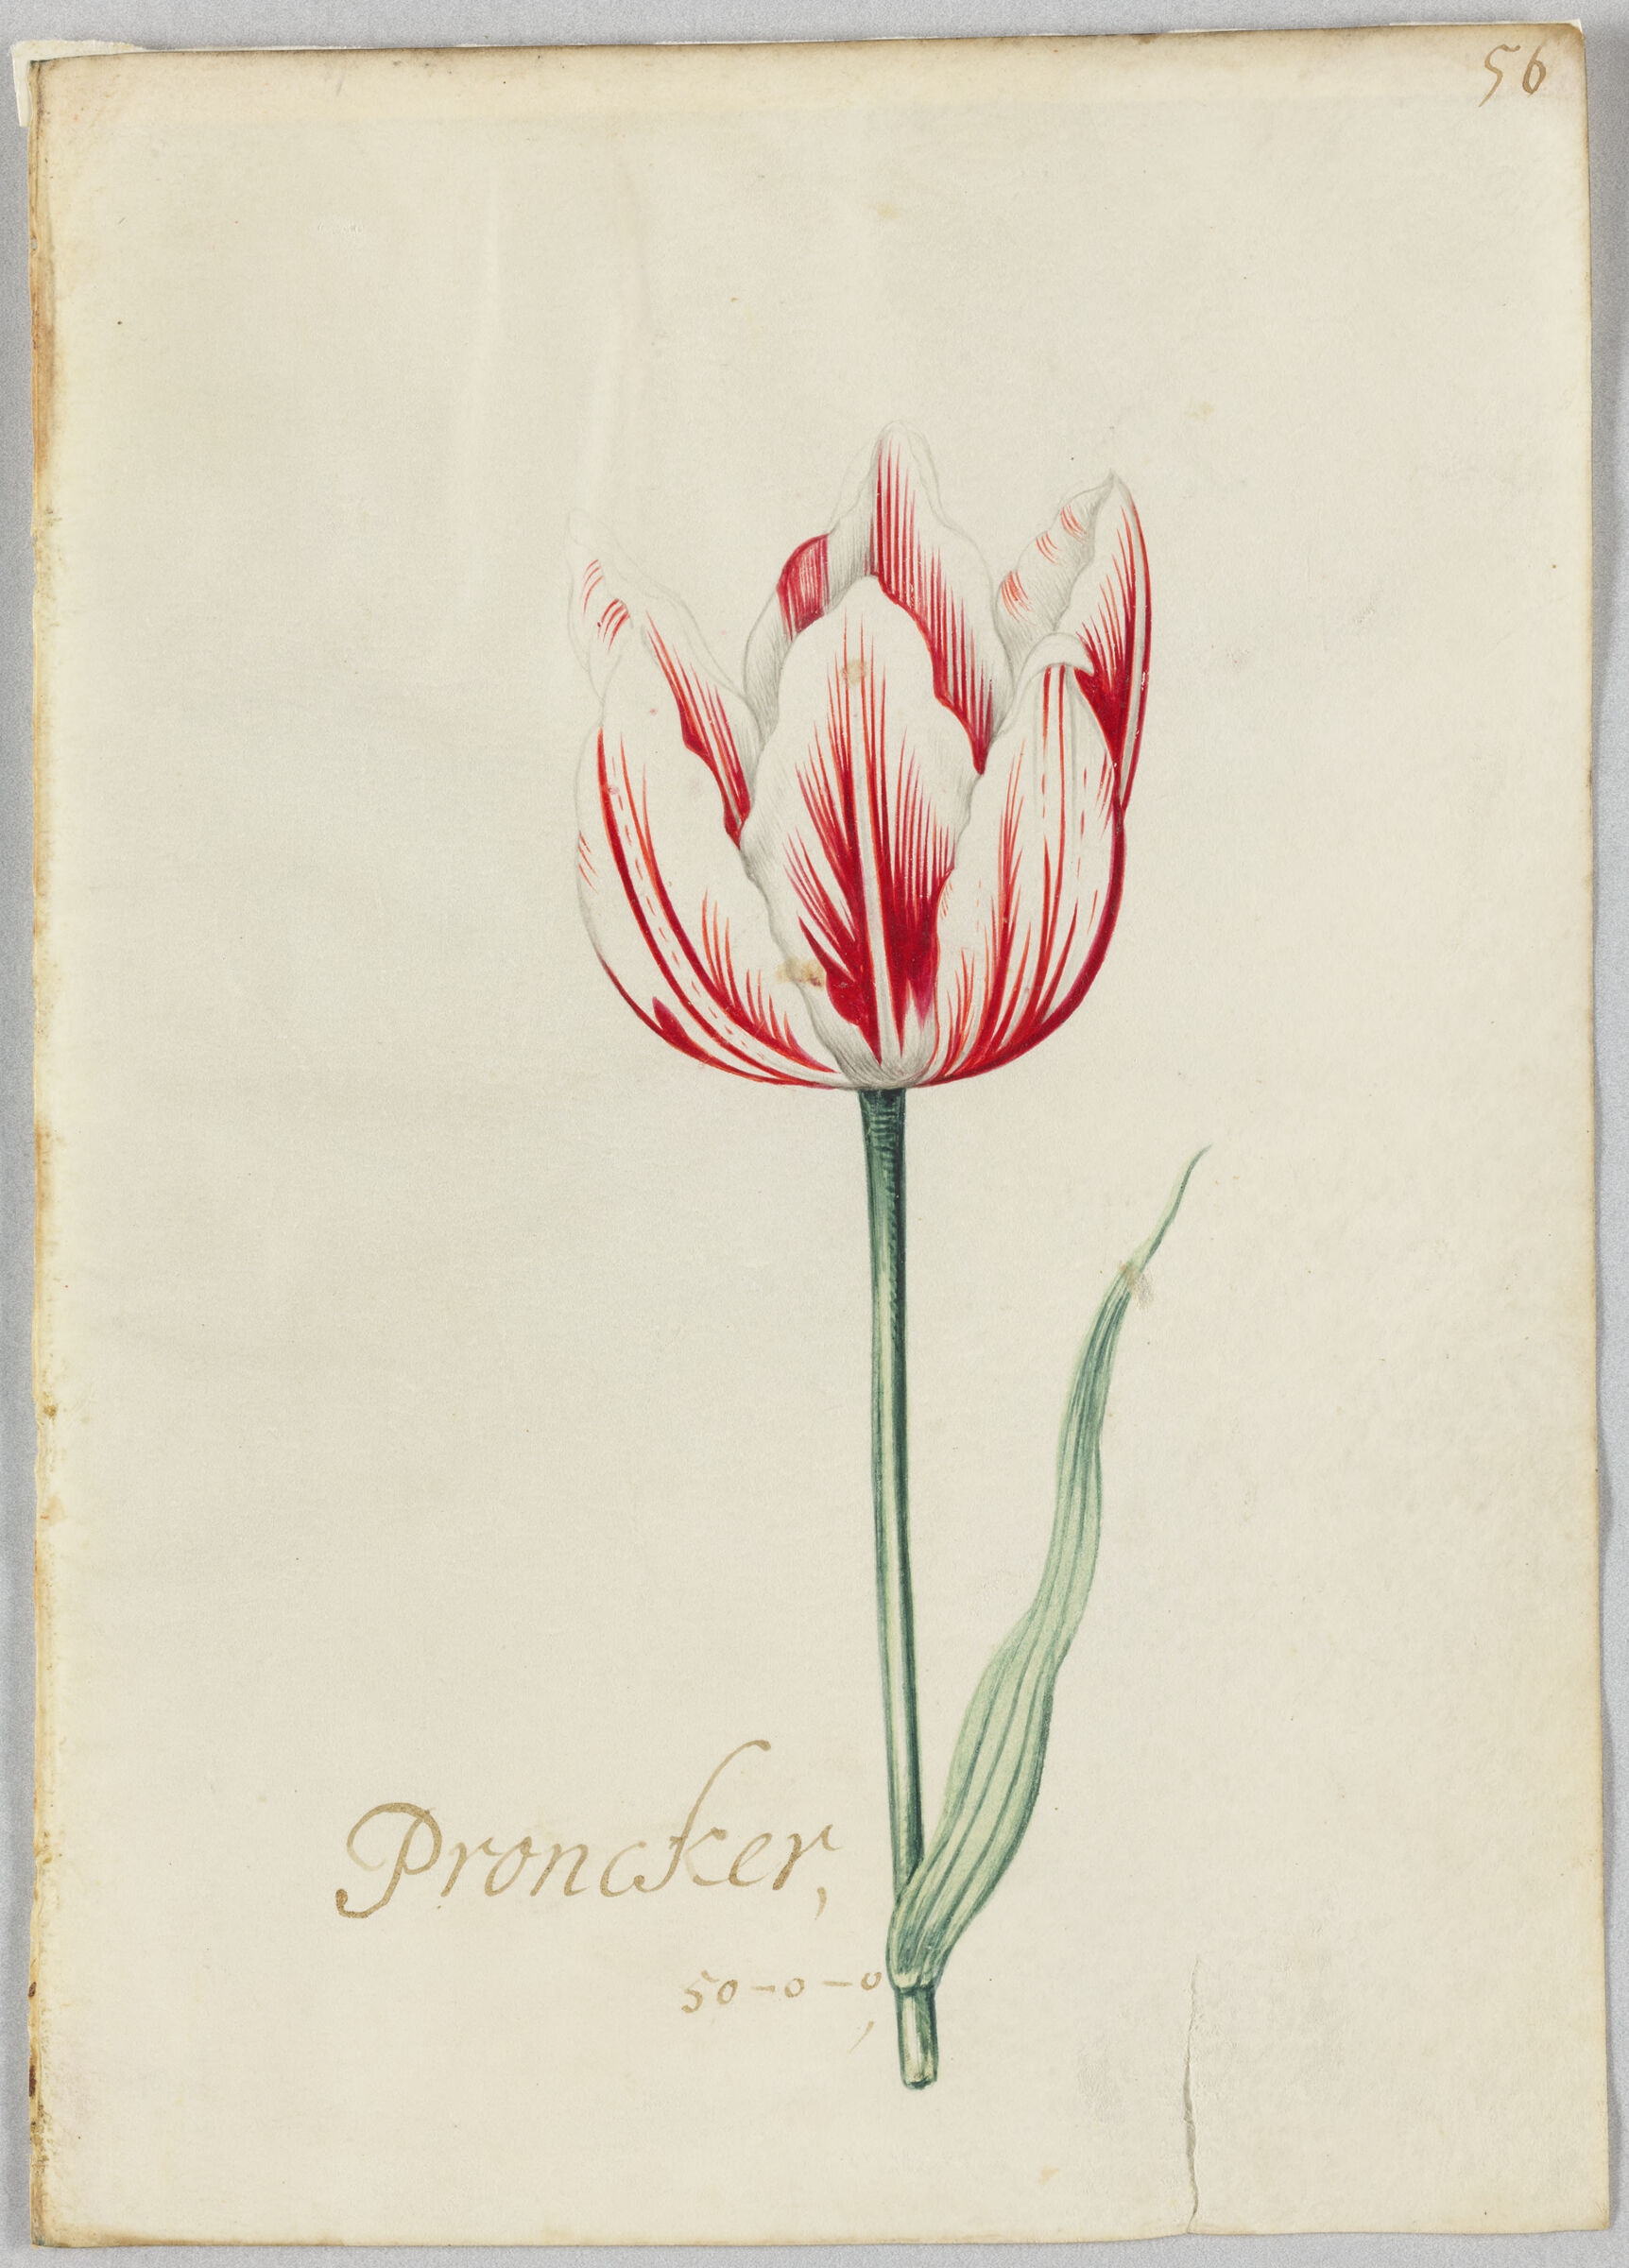 A Red And White Striped Tulip (Proncker)